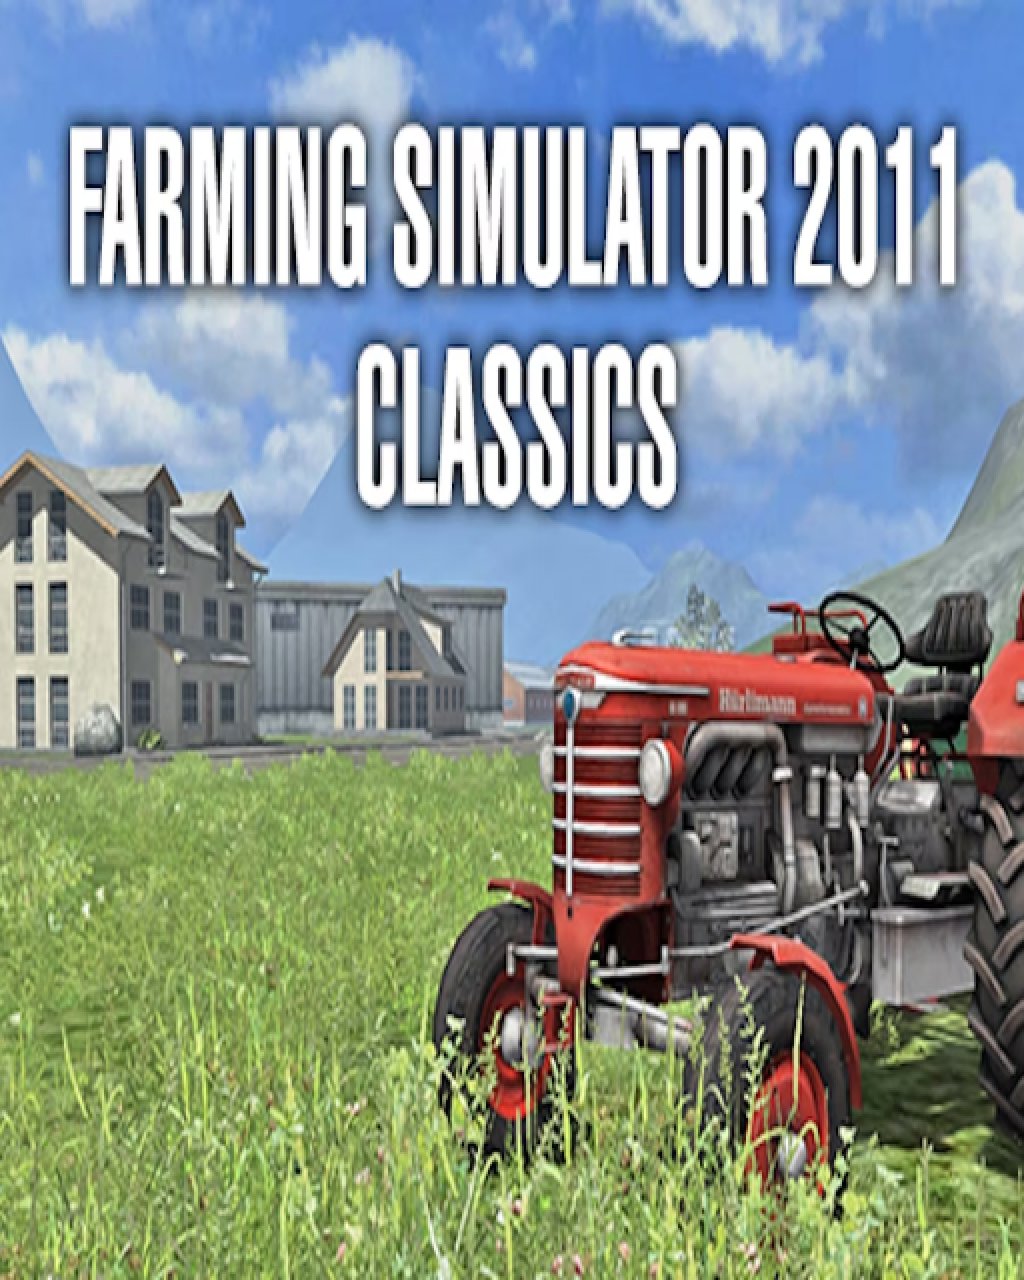 ESD Farming Simulator 2011 Classics